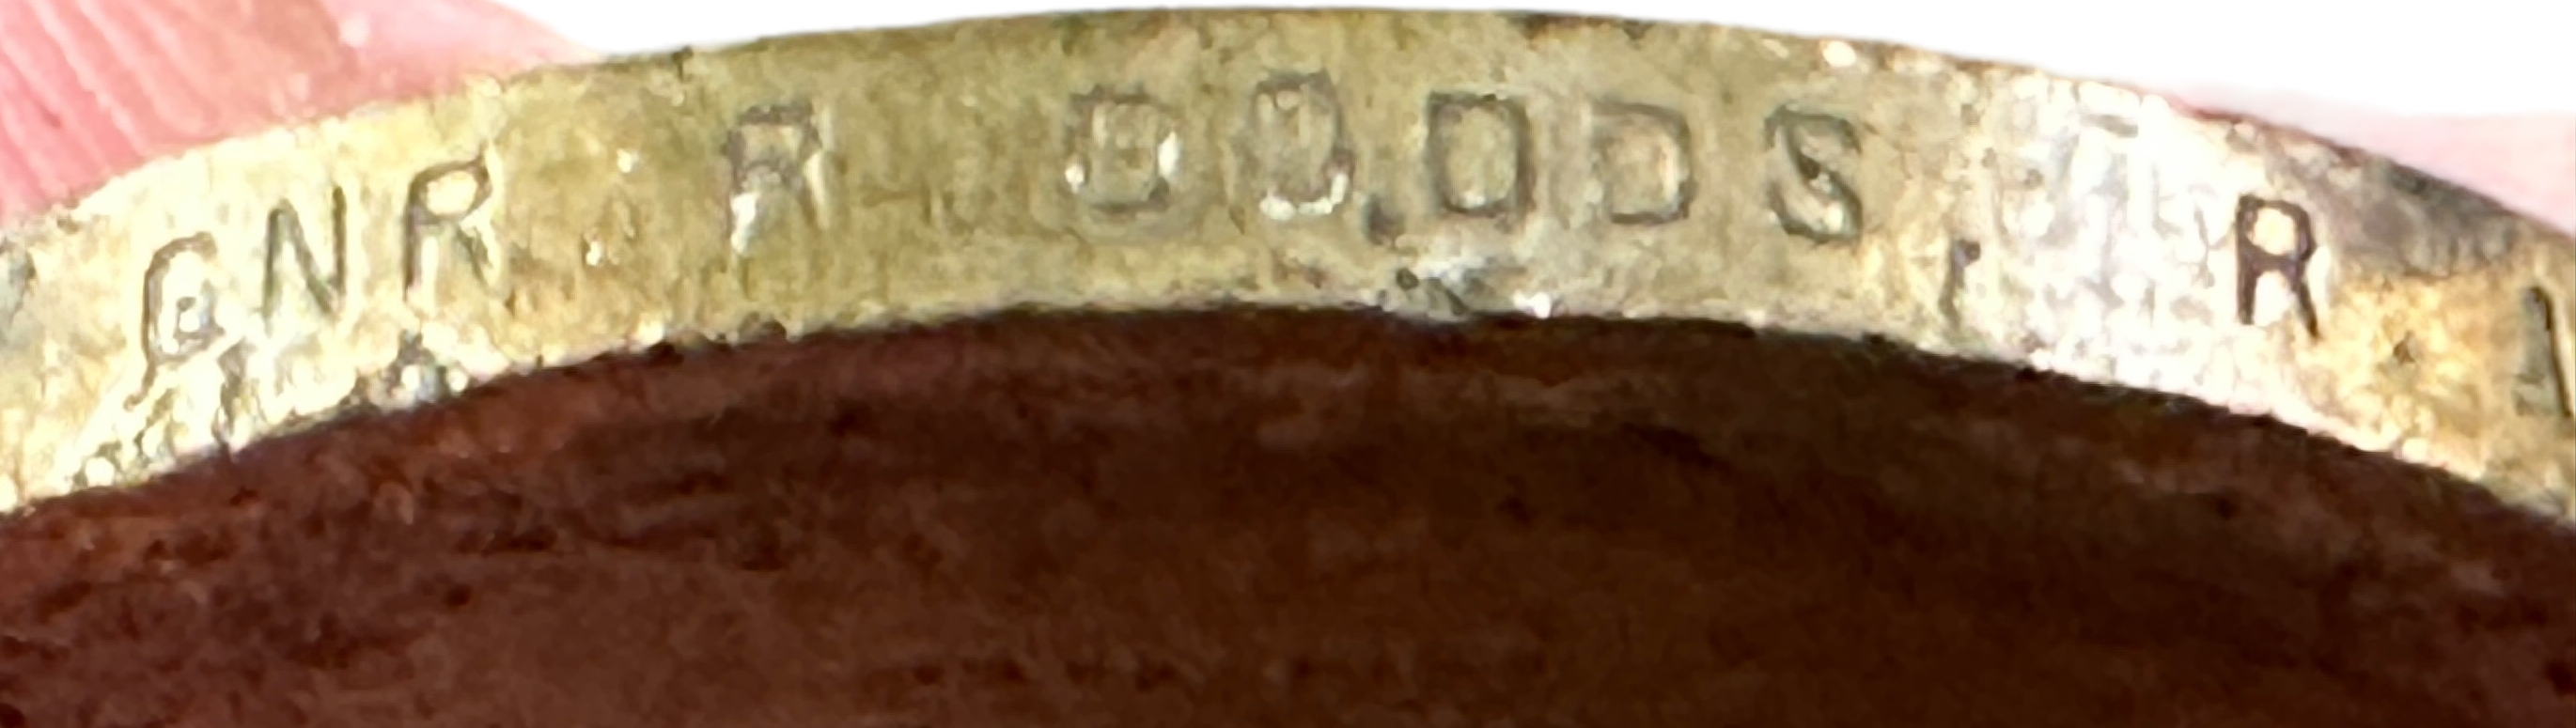 World War One BWM to a: 58363 GNR R.DODDS. R.A. and WW2 Medal etc. - Image 2 of 3